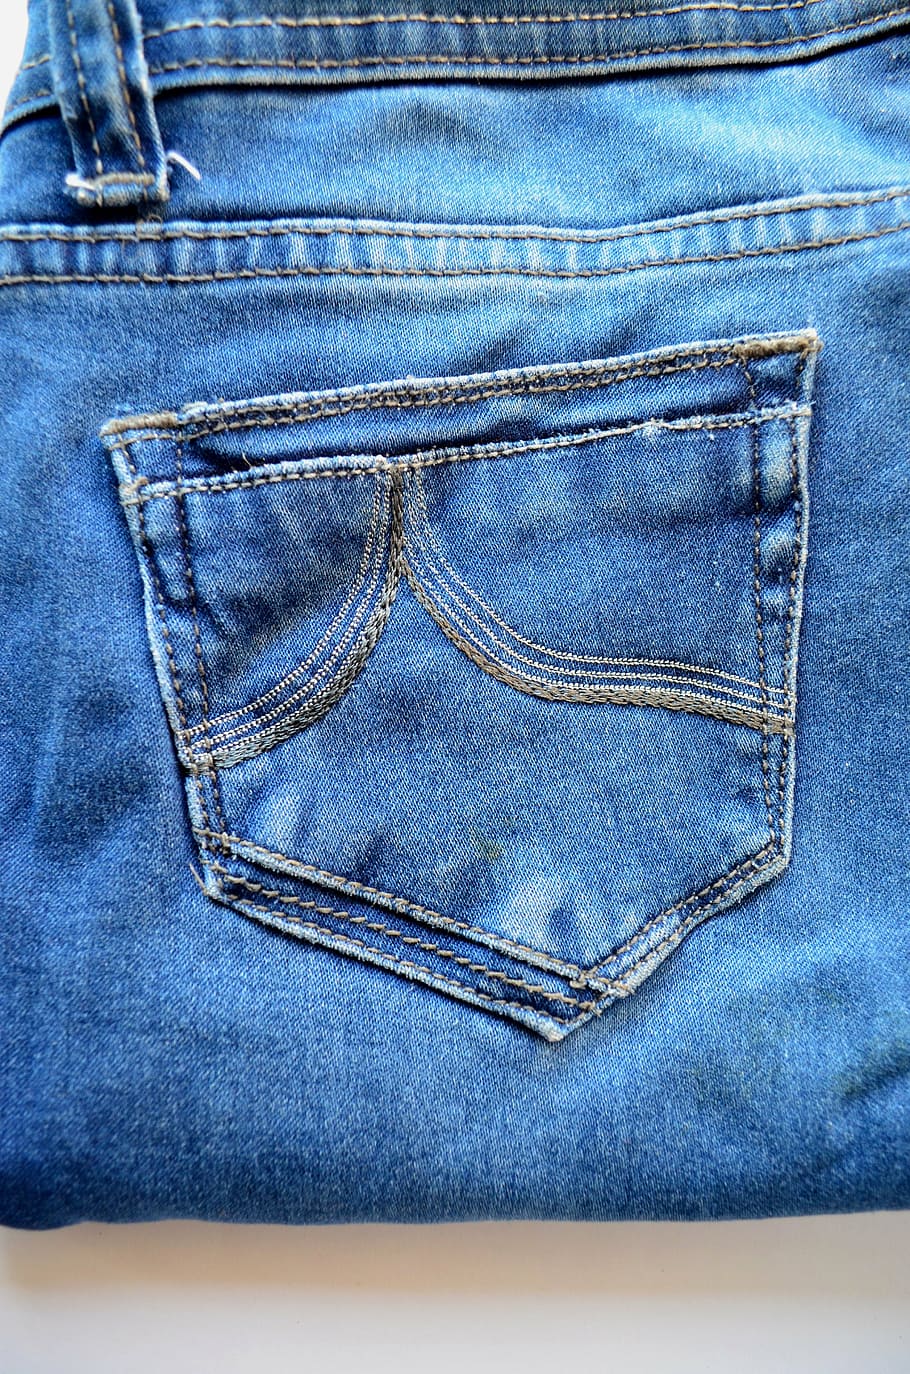 blue jeans, jeans, biru, saku, mode, pakaian, kasual, denim, katun, kain